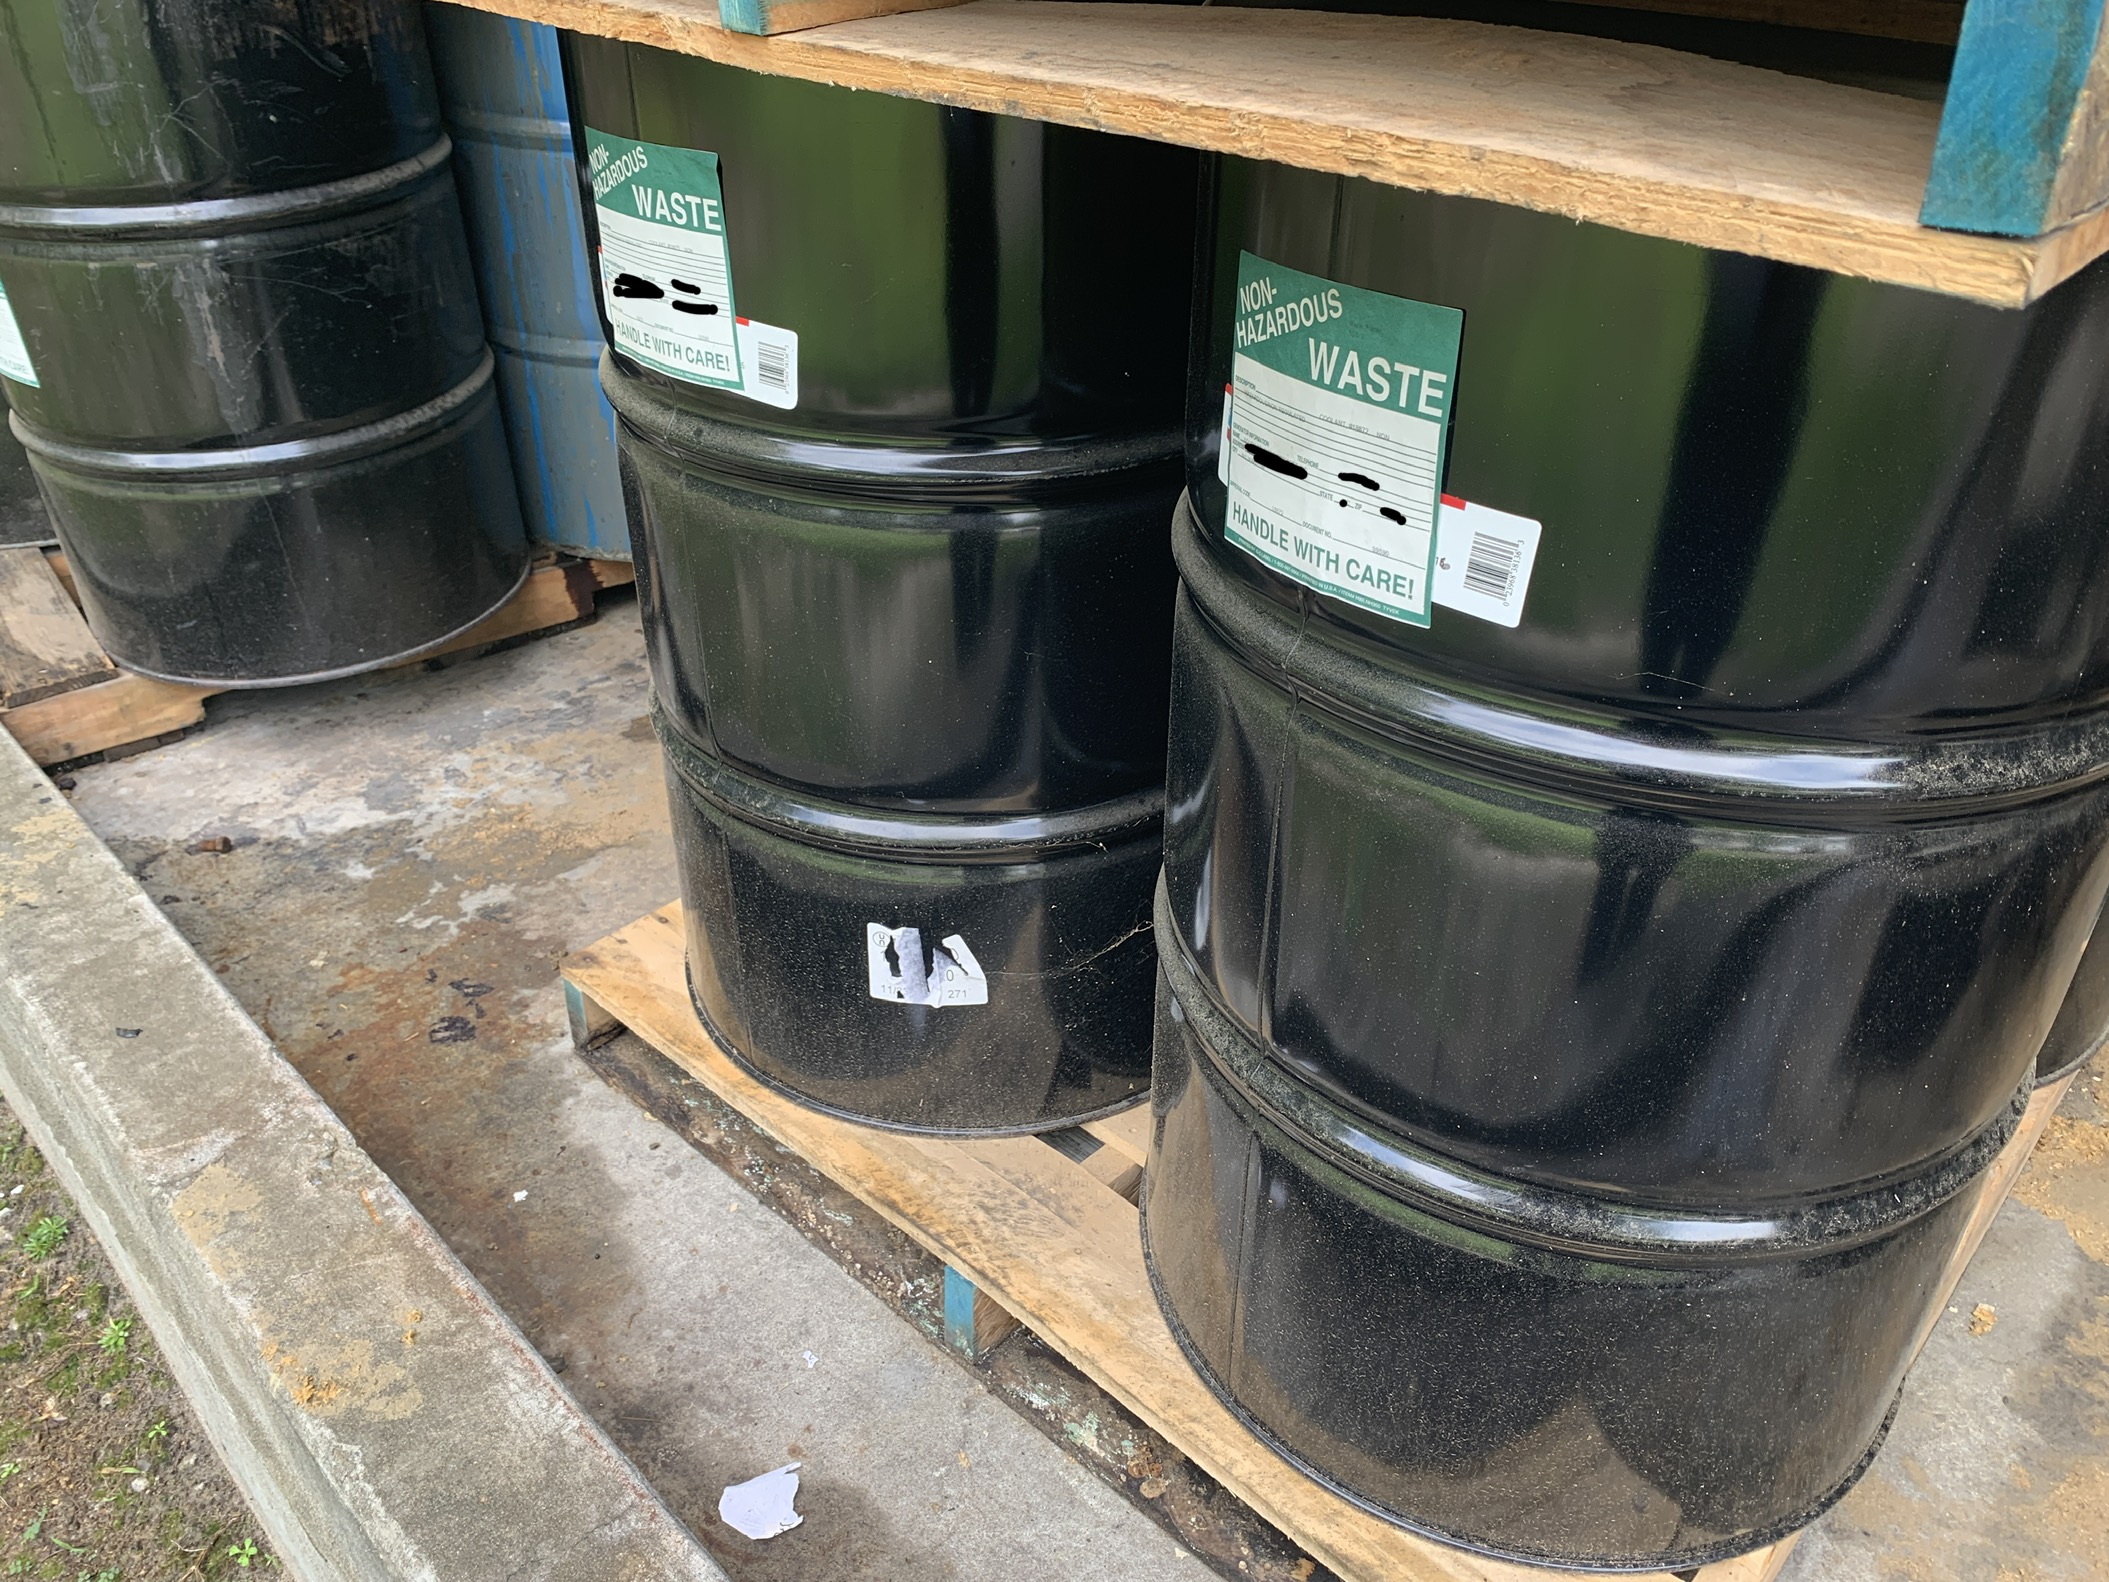 Hazardous Waste Disposal drum labeled